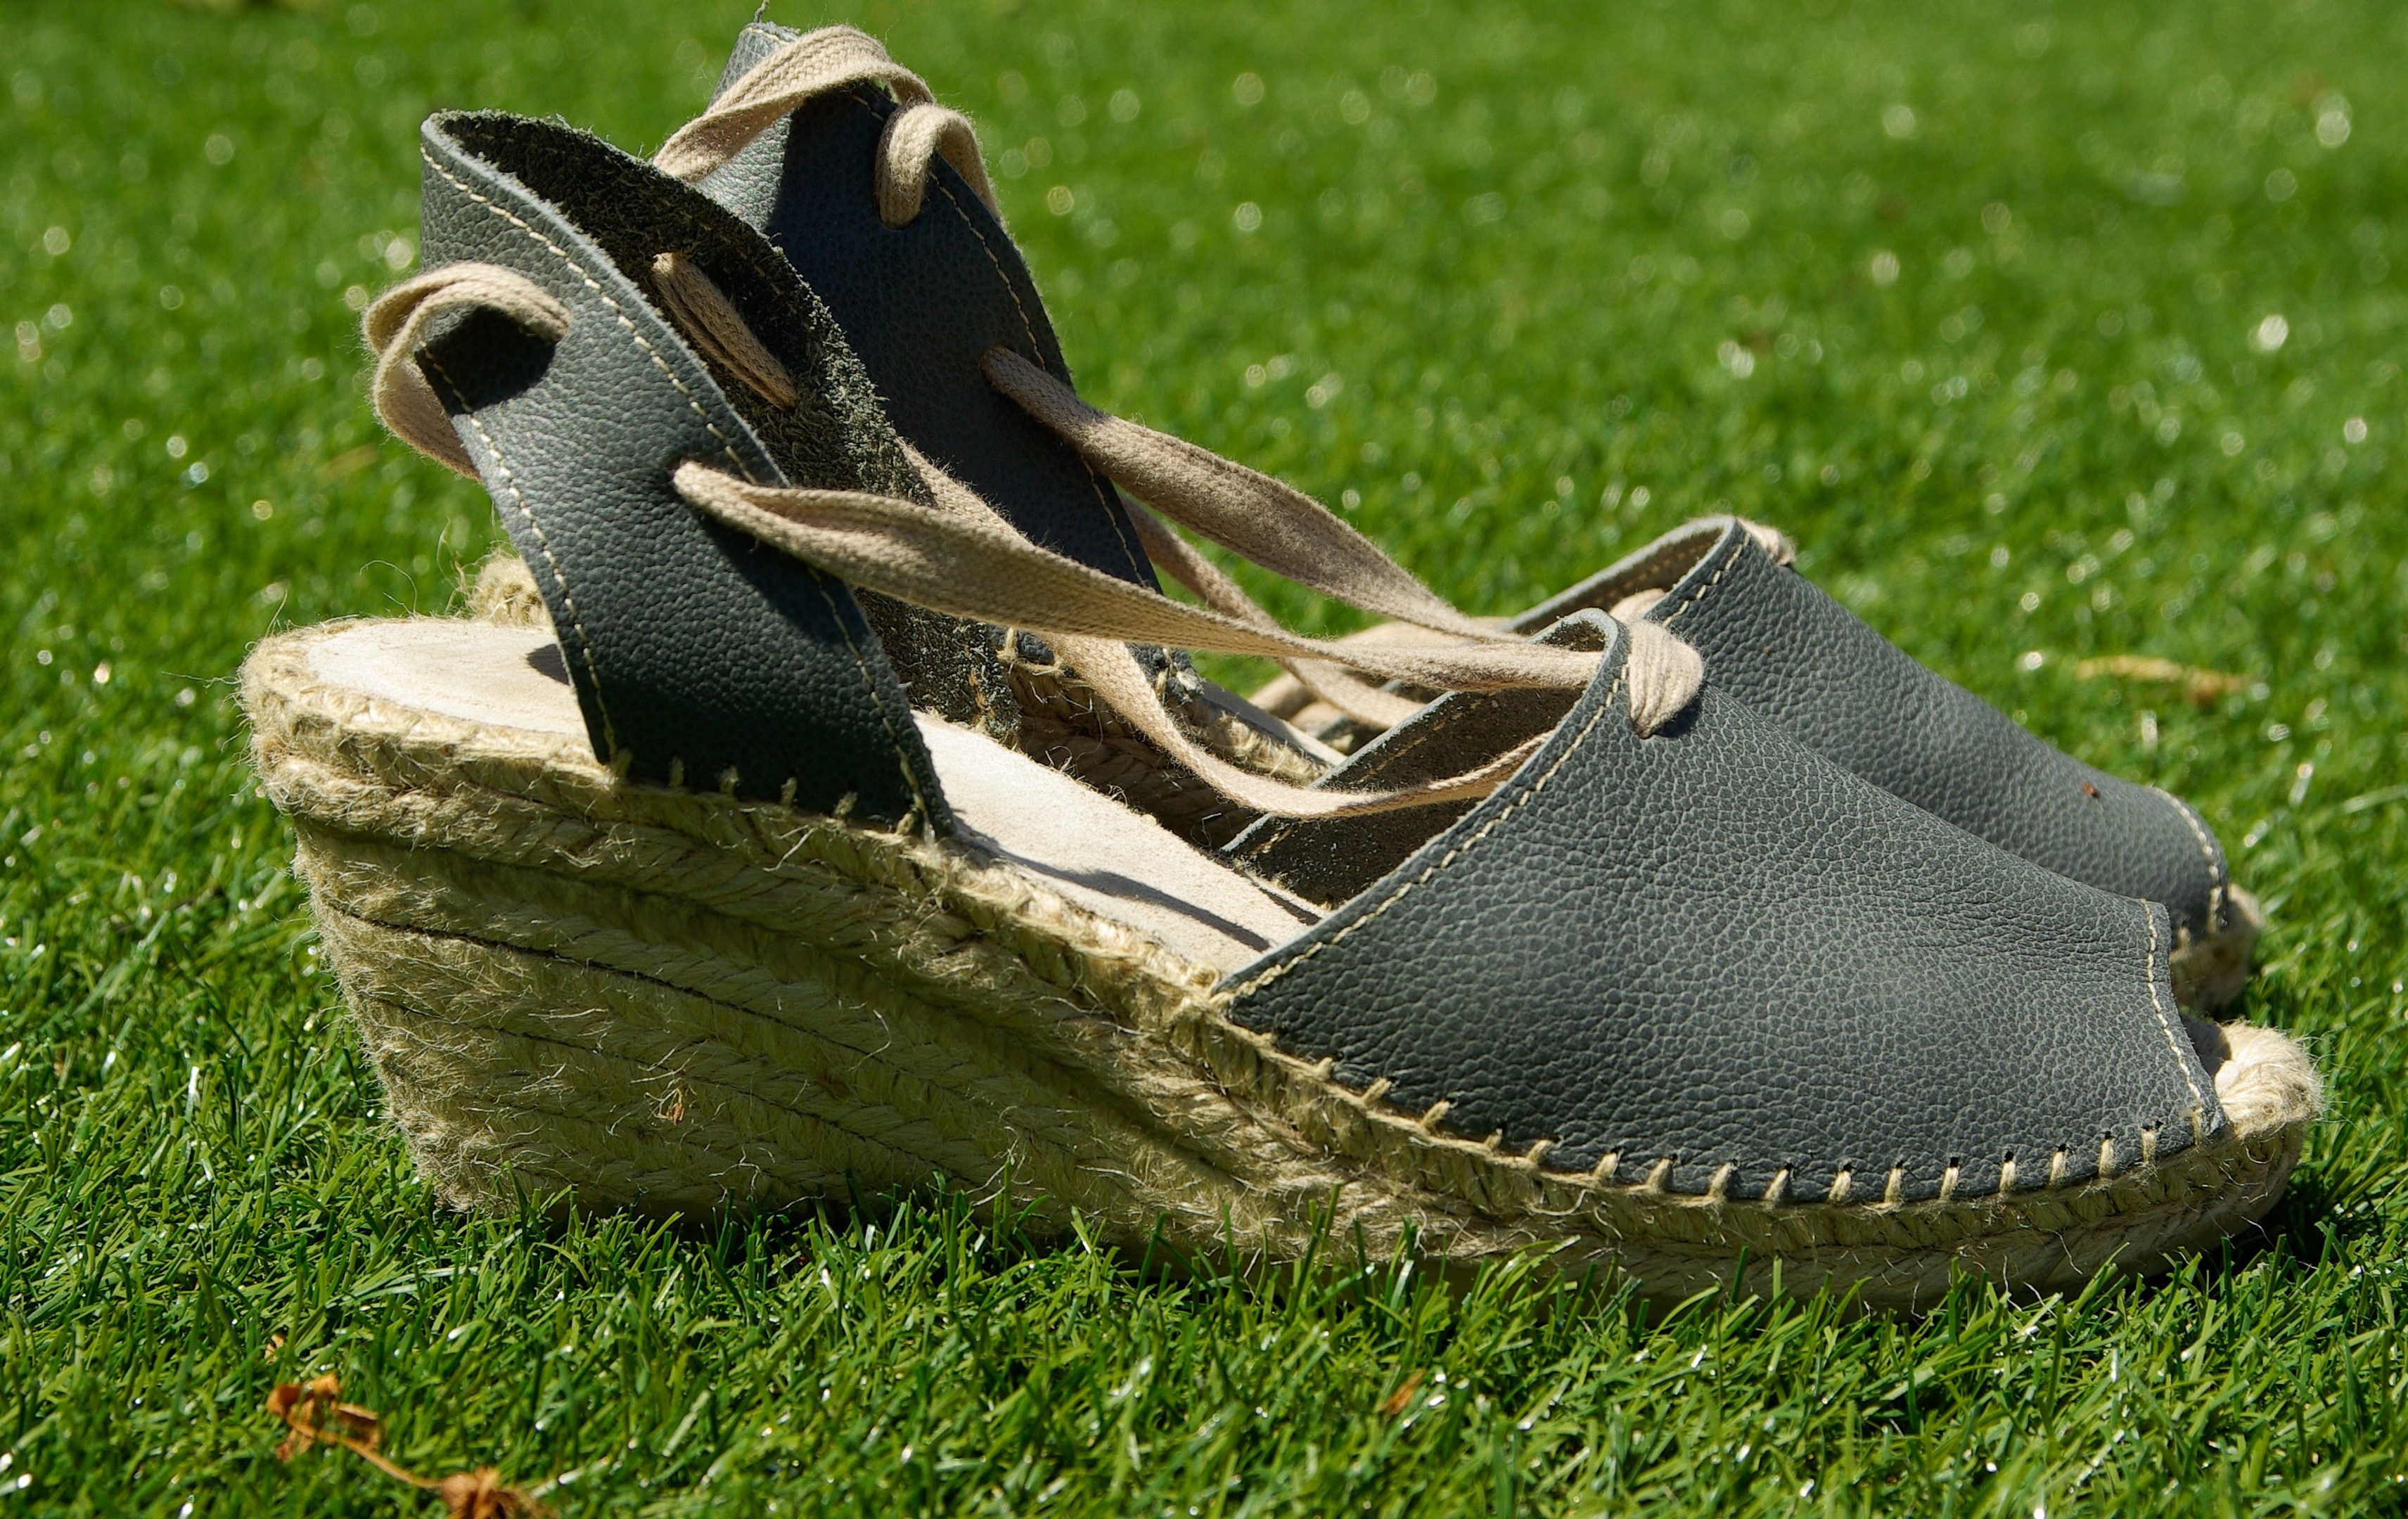 pair of espadrille wedge sandals on turf